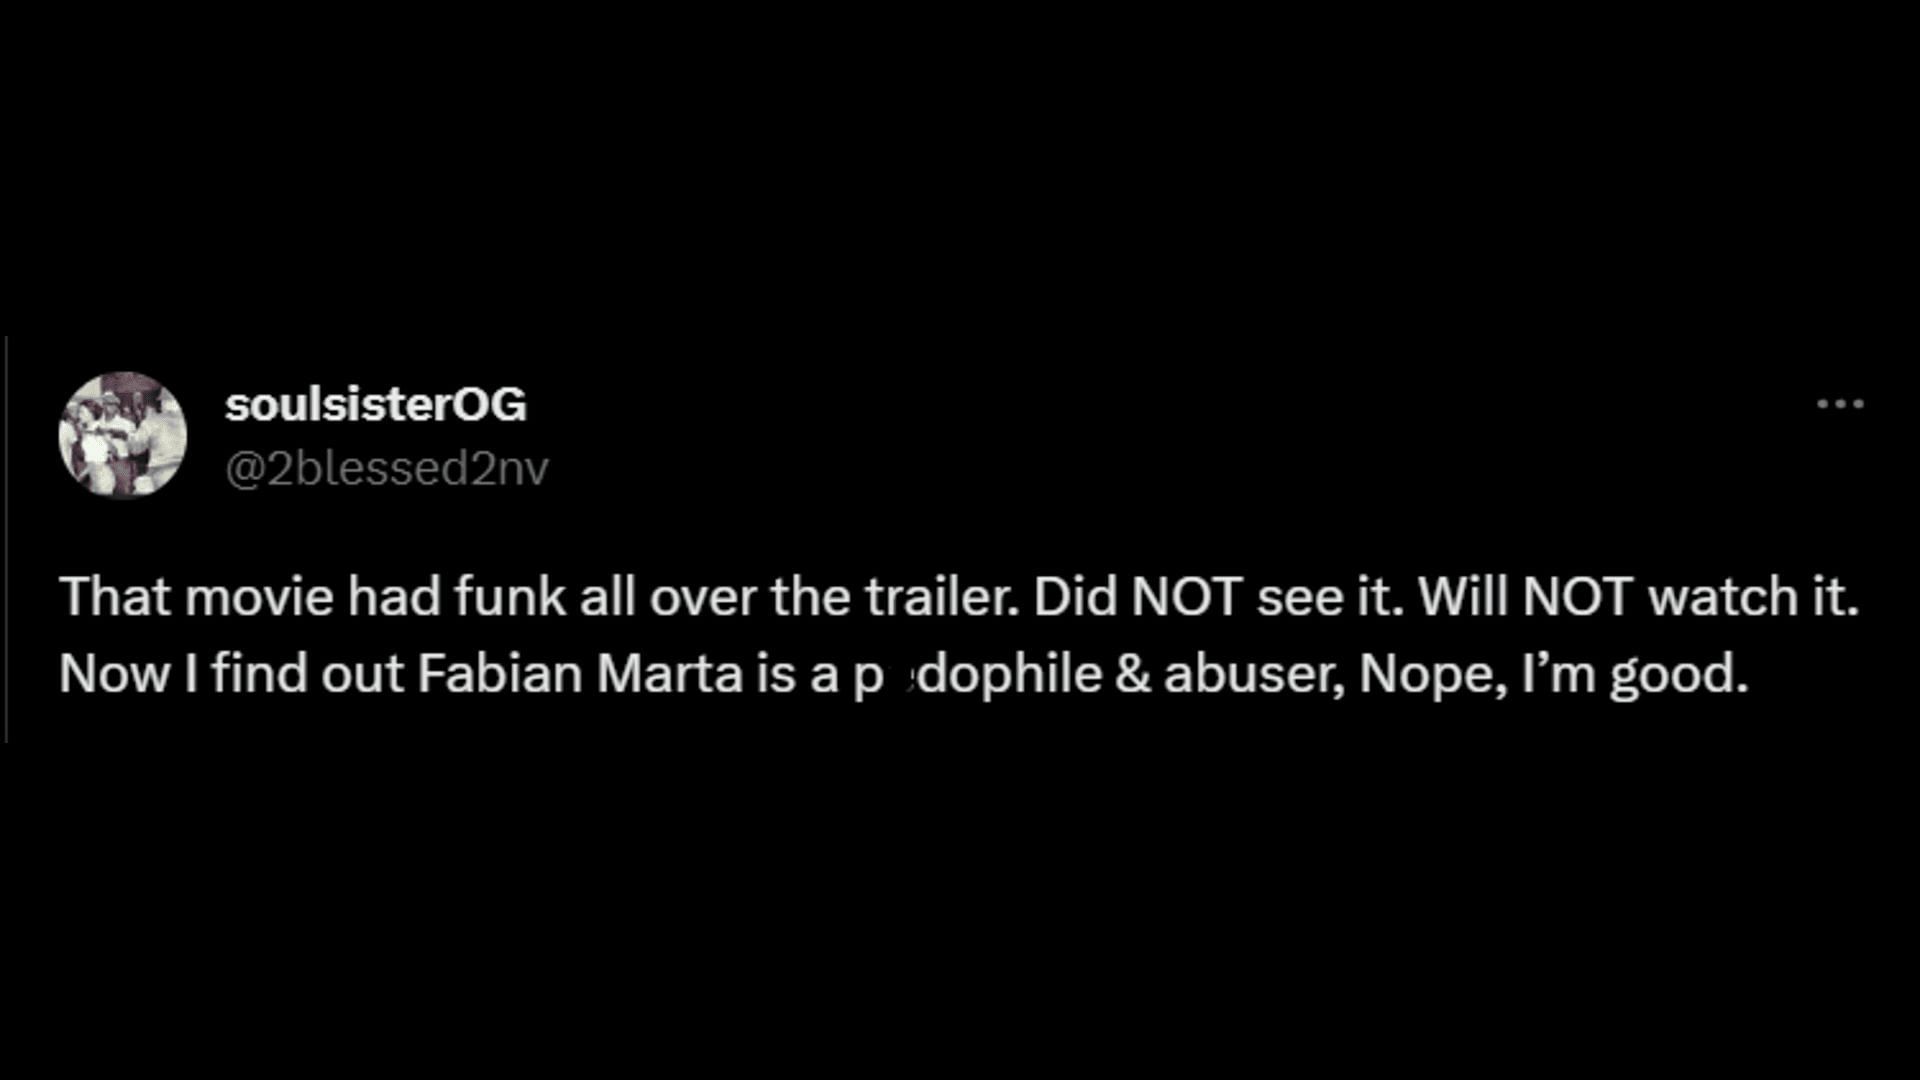 A netizen criticizes Fabian Marta. (Image via Twitter/soulsisterOG)